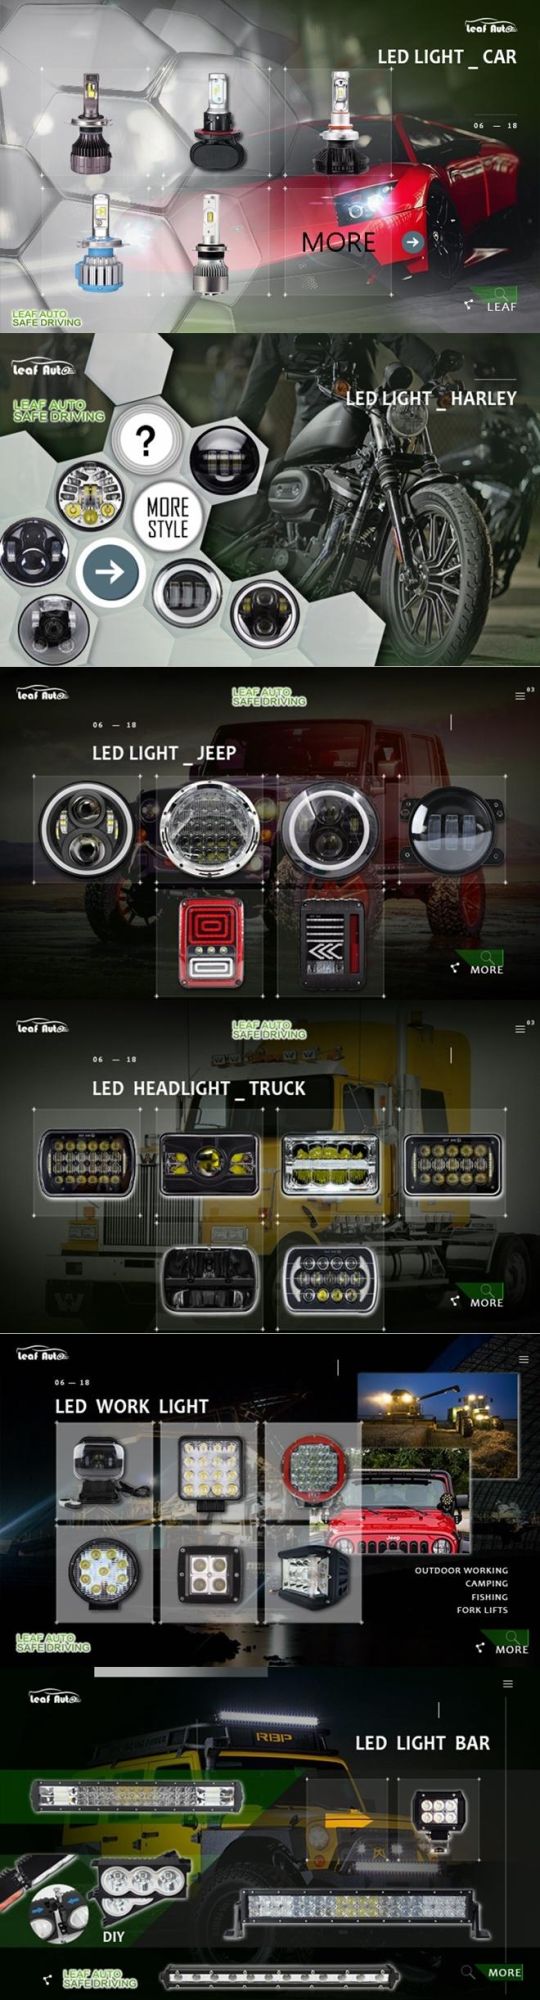 7′′ Black Headlight for Jeep Wrangler, Motorcycle